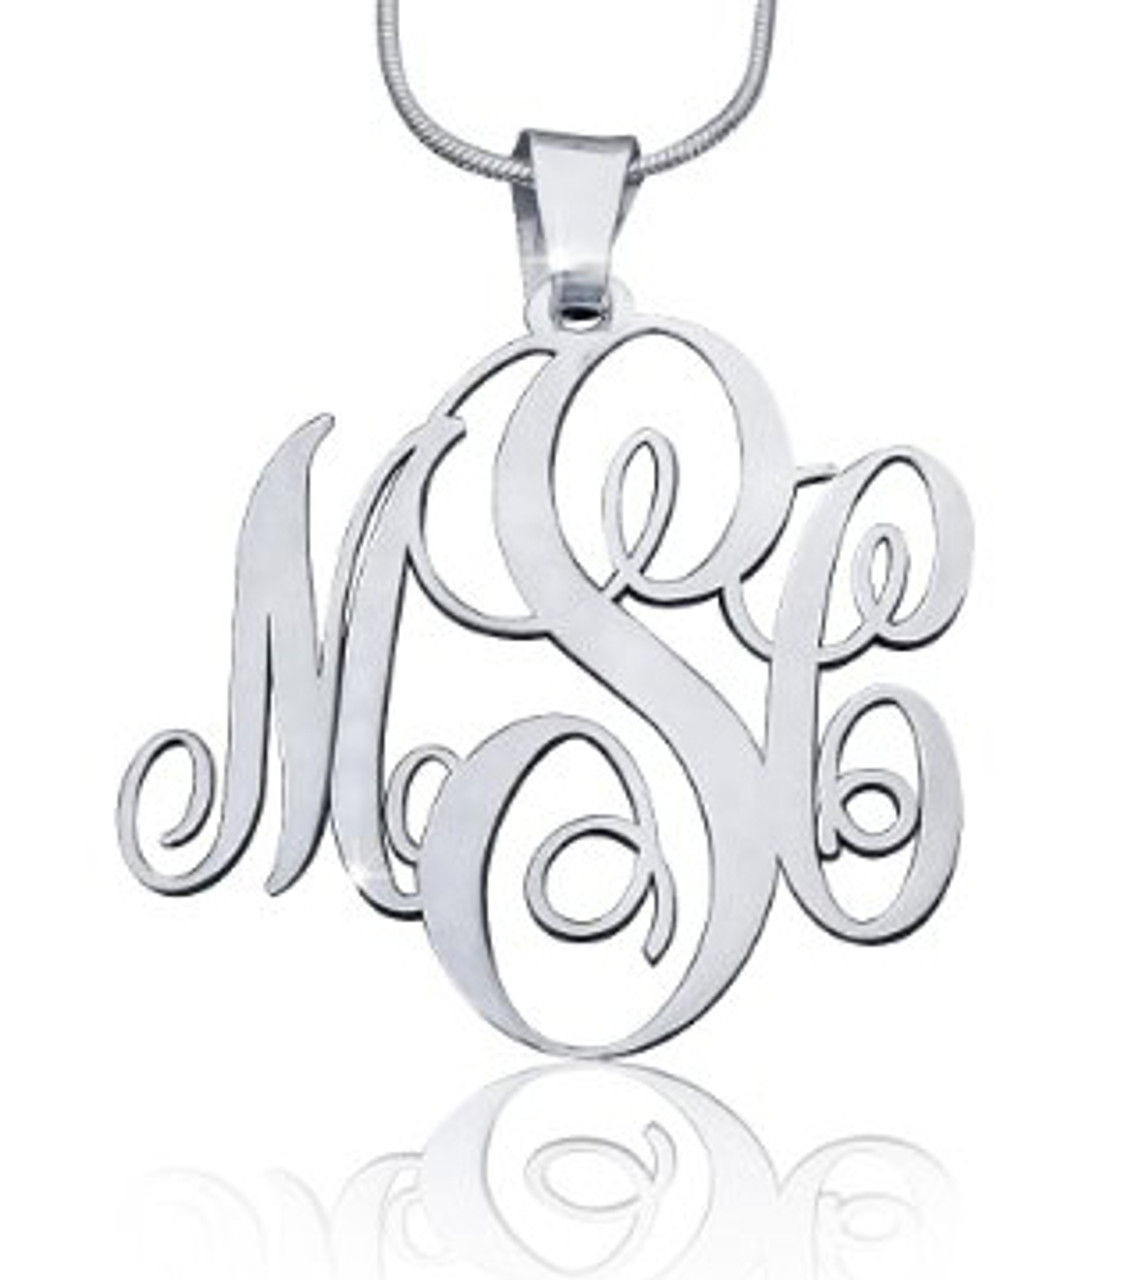 script monogram necklace featured at